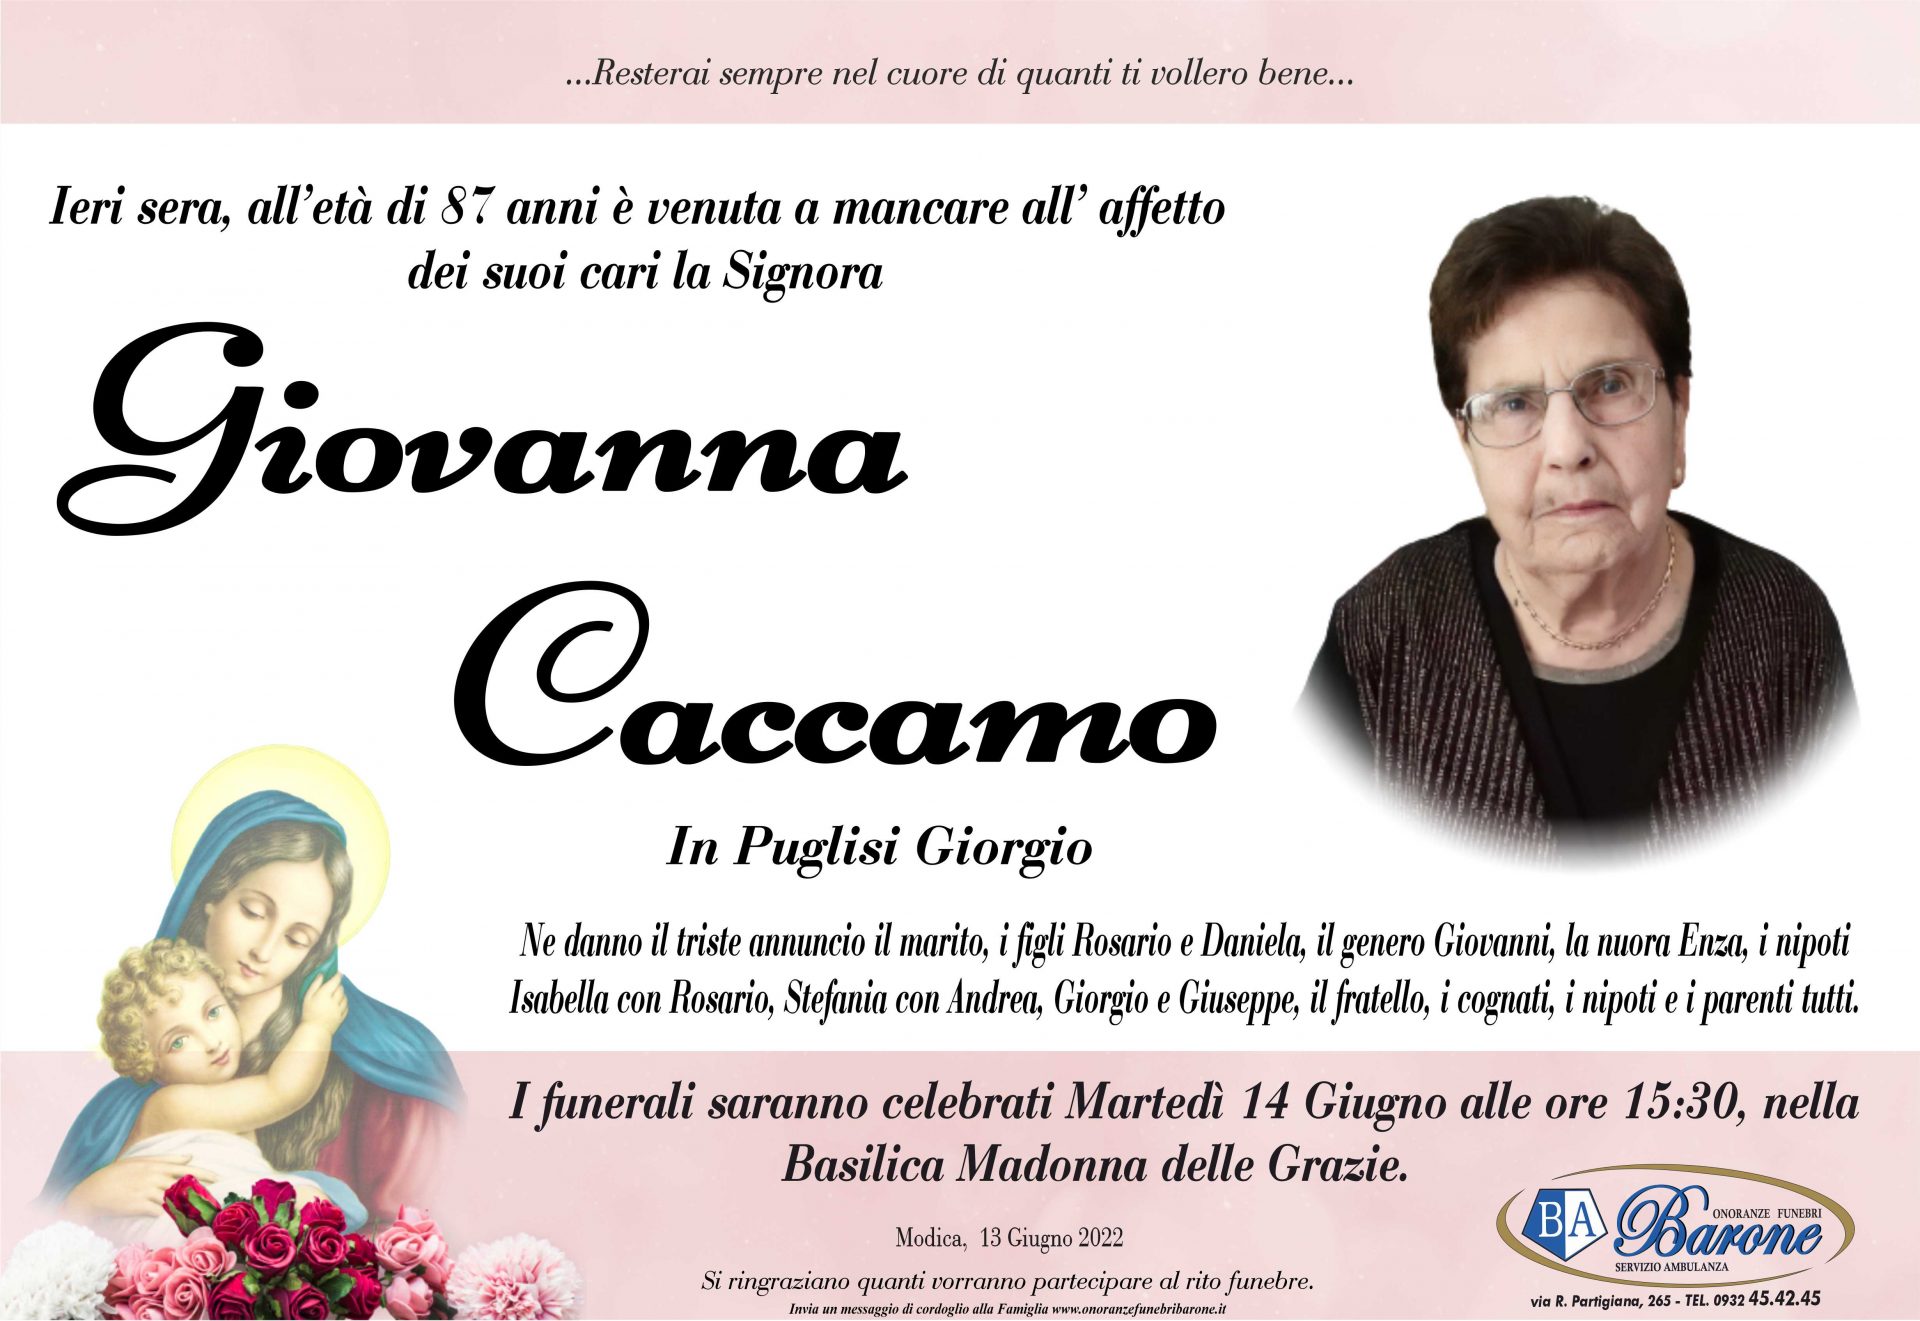 Giovanna Caccamo